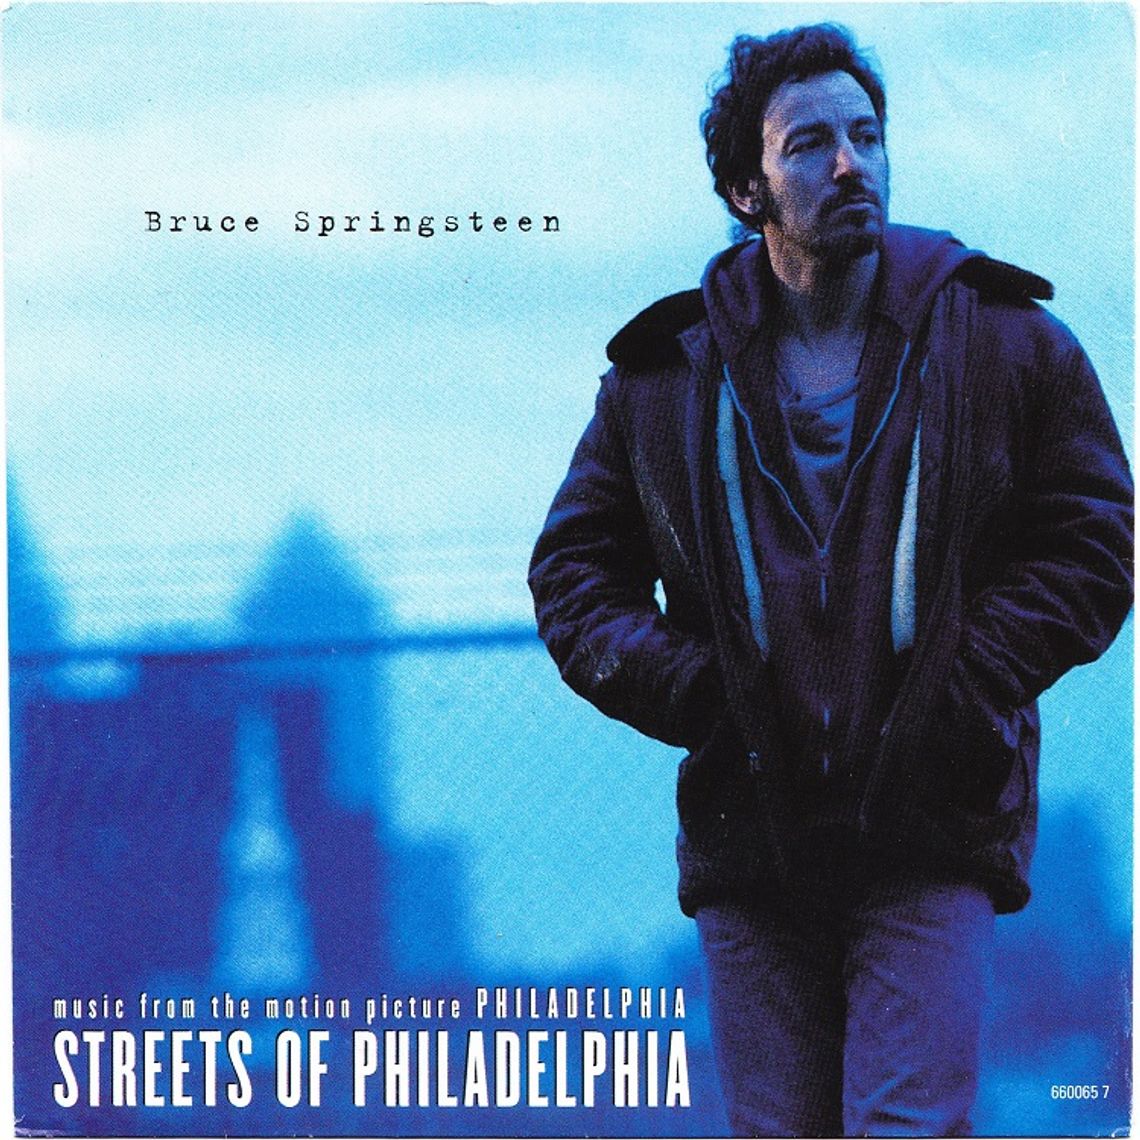 BRUCE SPRINGSTEEN "Streets od Philadelphia"